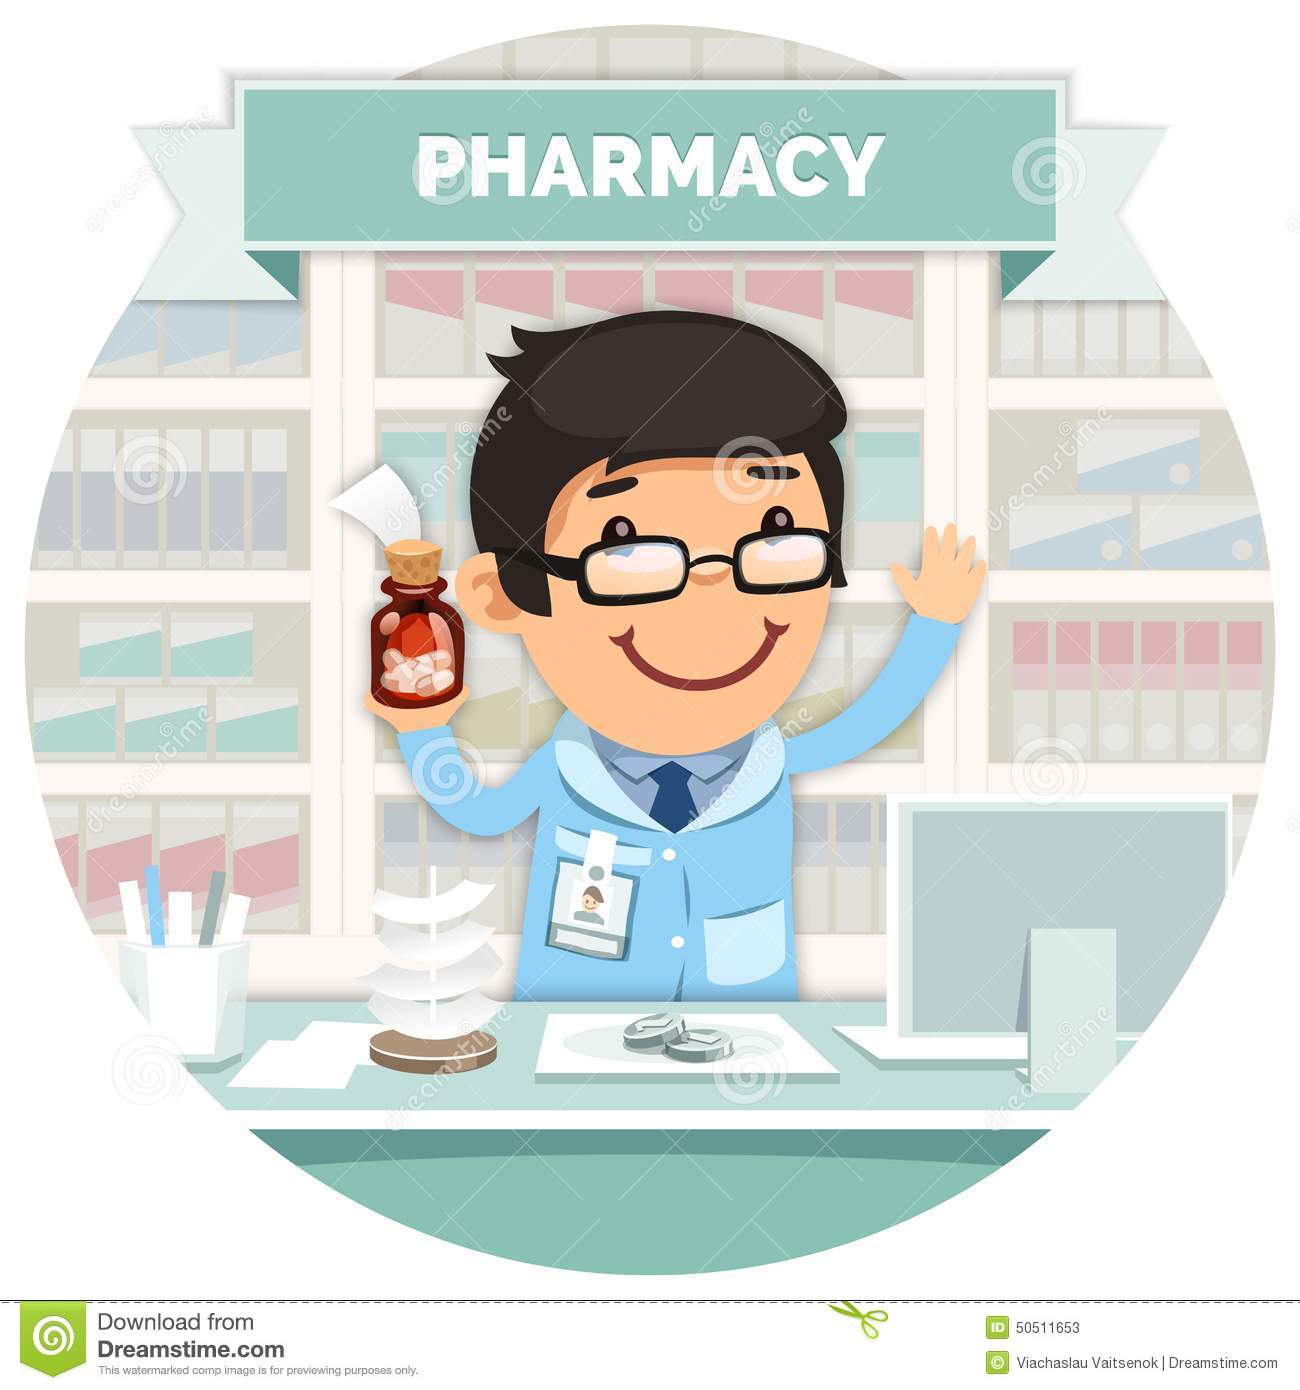 free pharmacy clip art images - photo #48